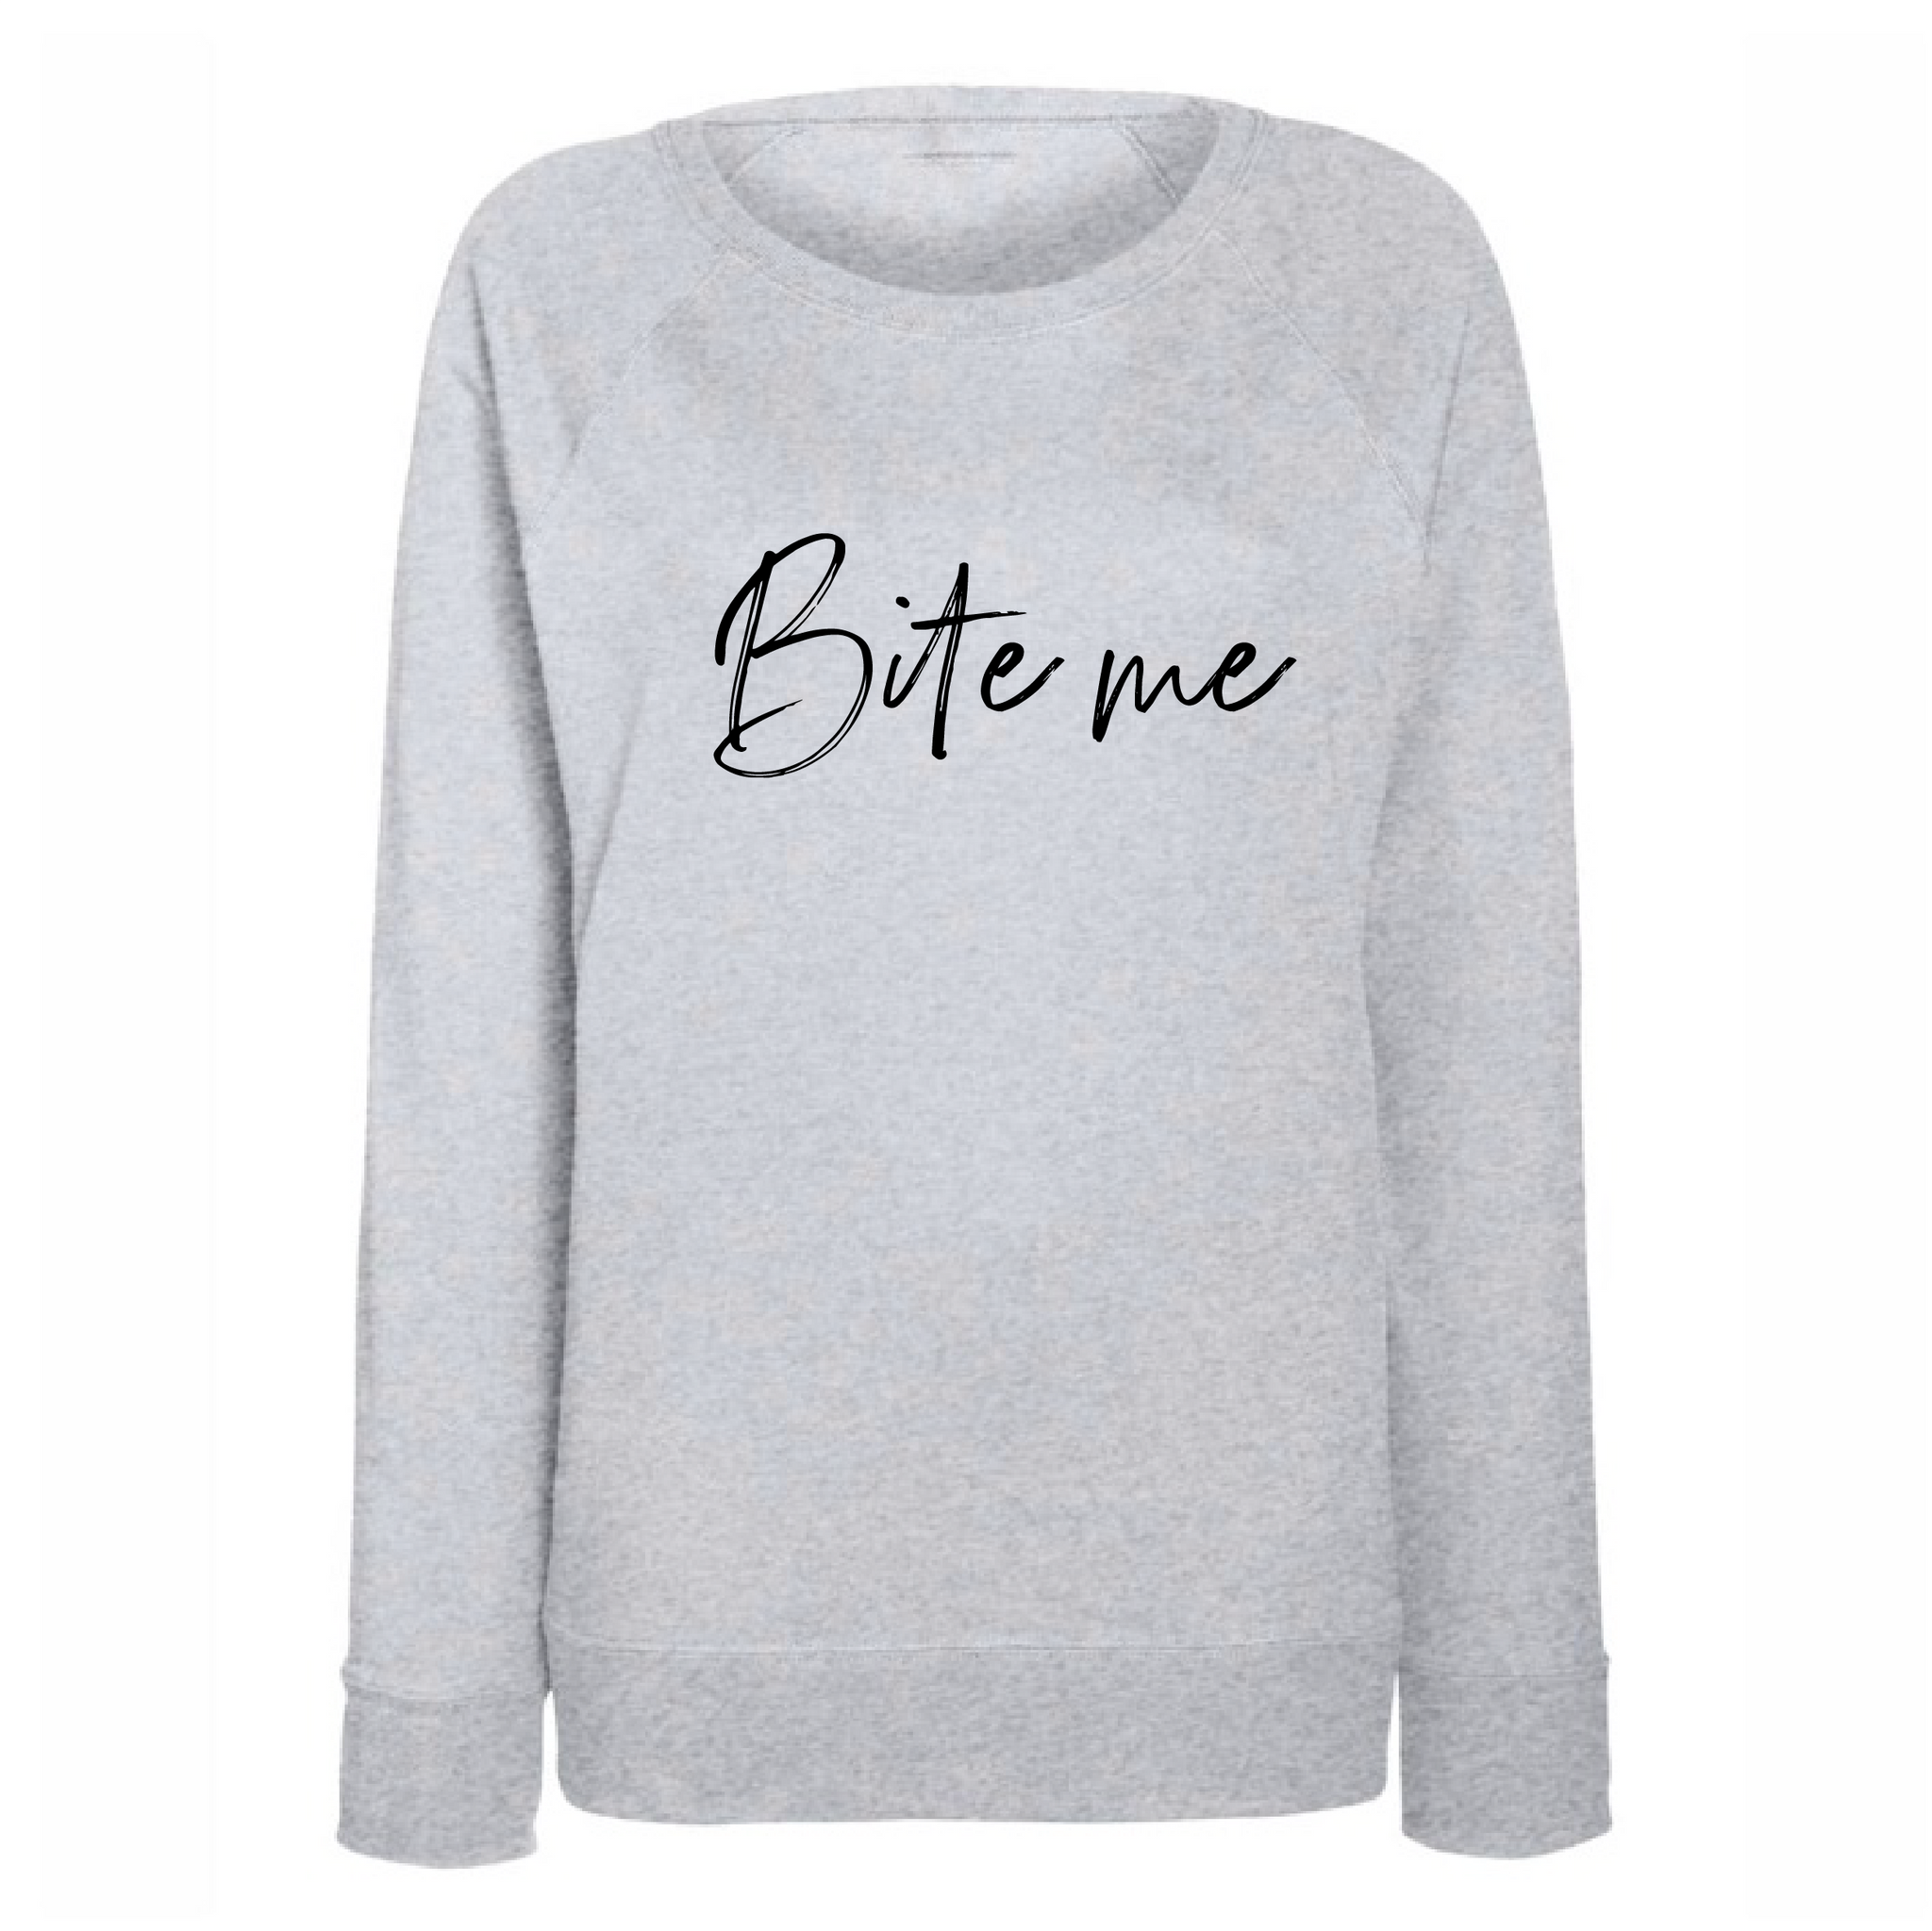 "Bite me" slogan top